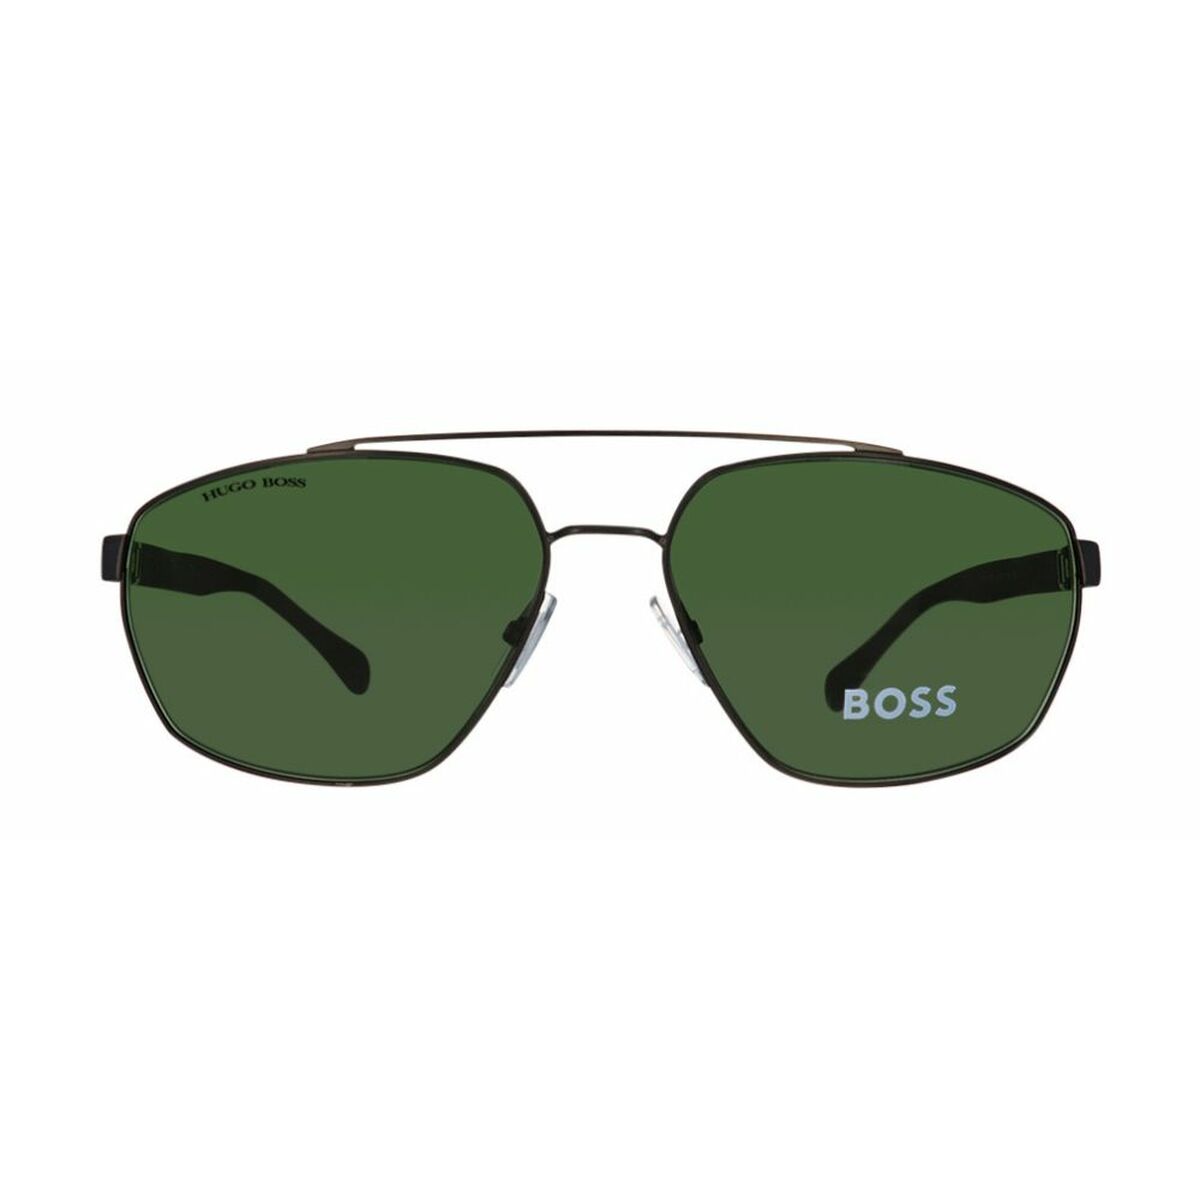 Kaufe Herrensonnenbrille Hugo Boss It Grau bei AWK Flagship um € 85.00